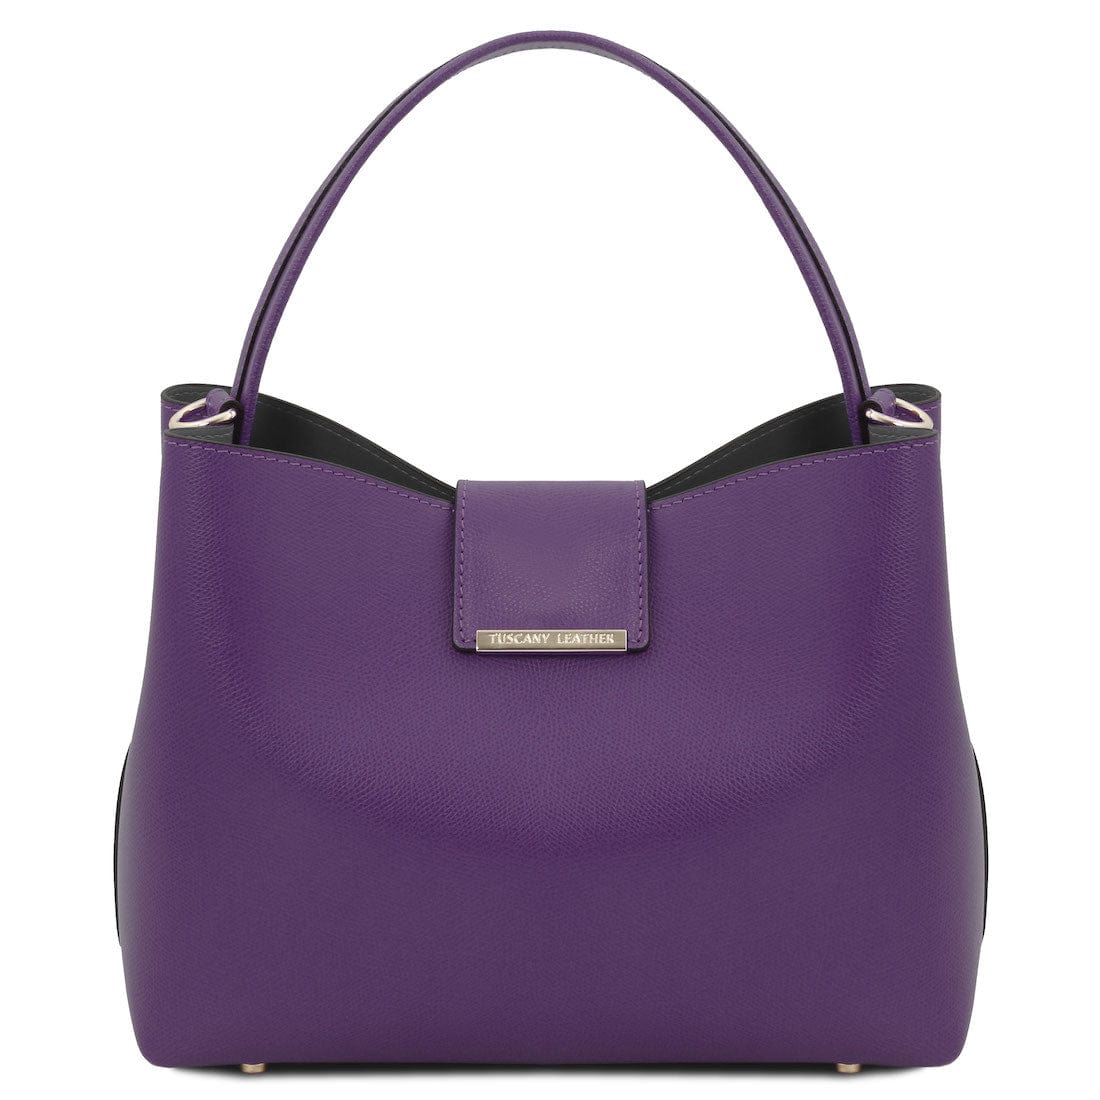 Clio - Palmellato leather bucket bag | TL141690 - Premium Leather handbags - Shop now at San Rocco Italia